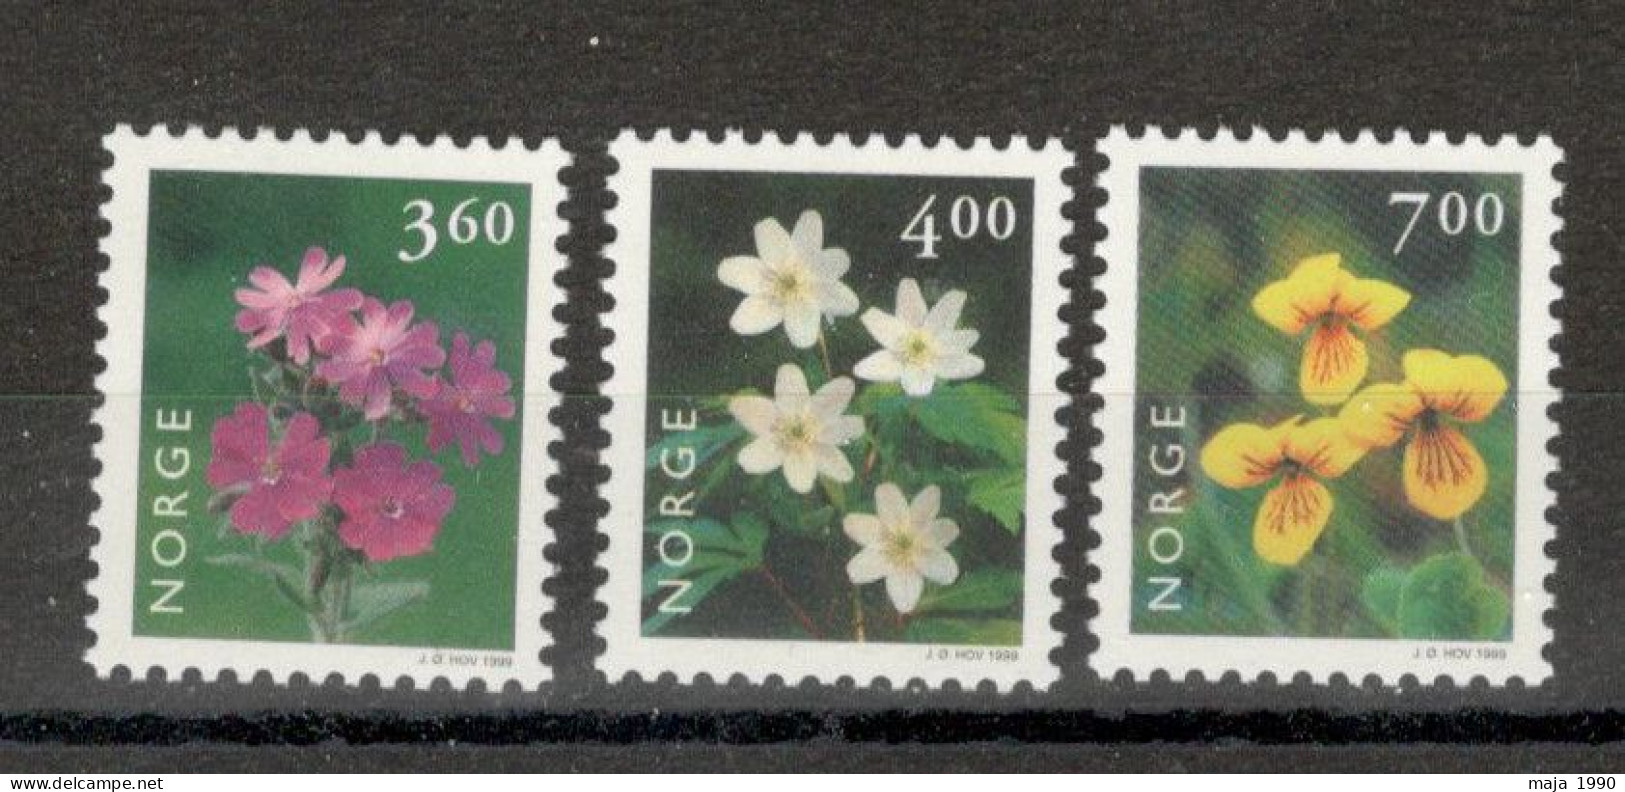 NORWAY - MNH SET - FLORA - FLOWERS - Mi.No. 1303/05 - 1999. - Nuovi